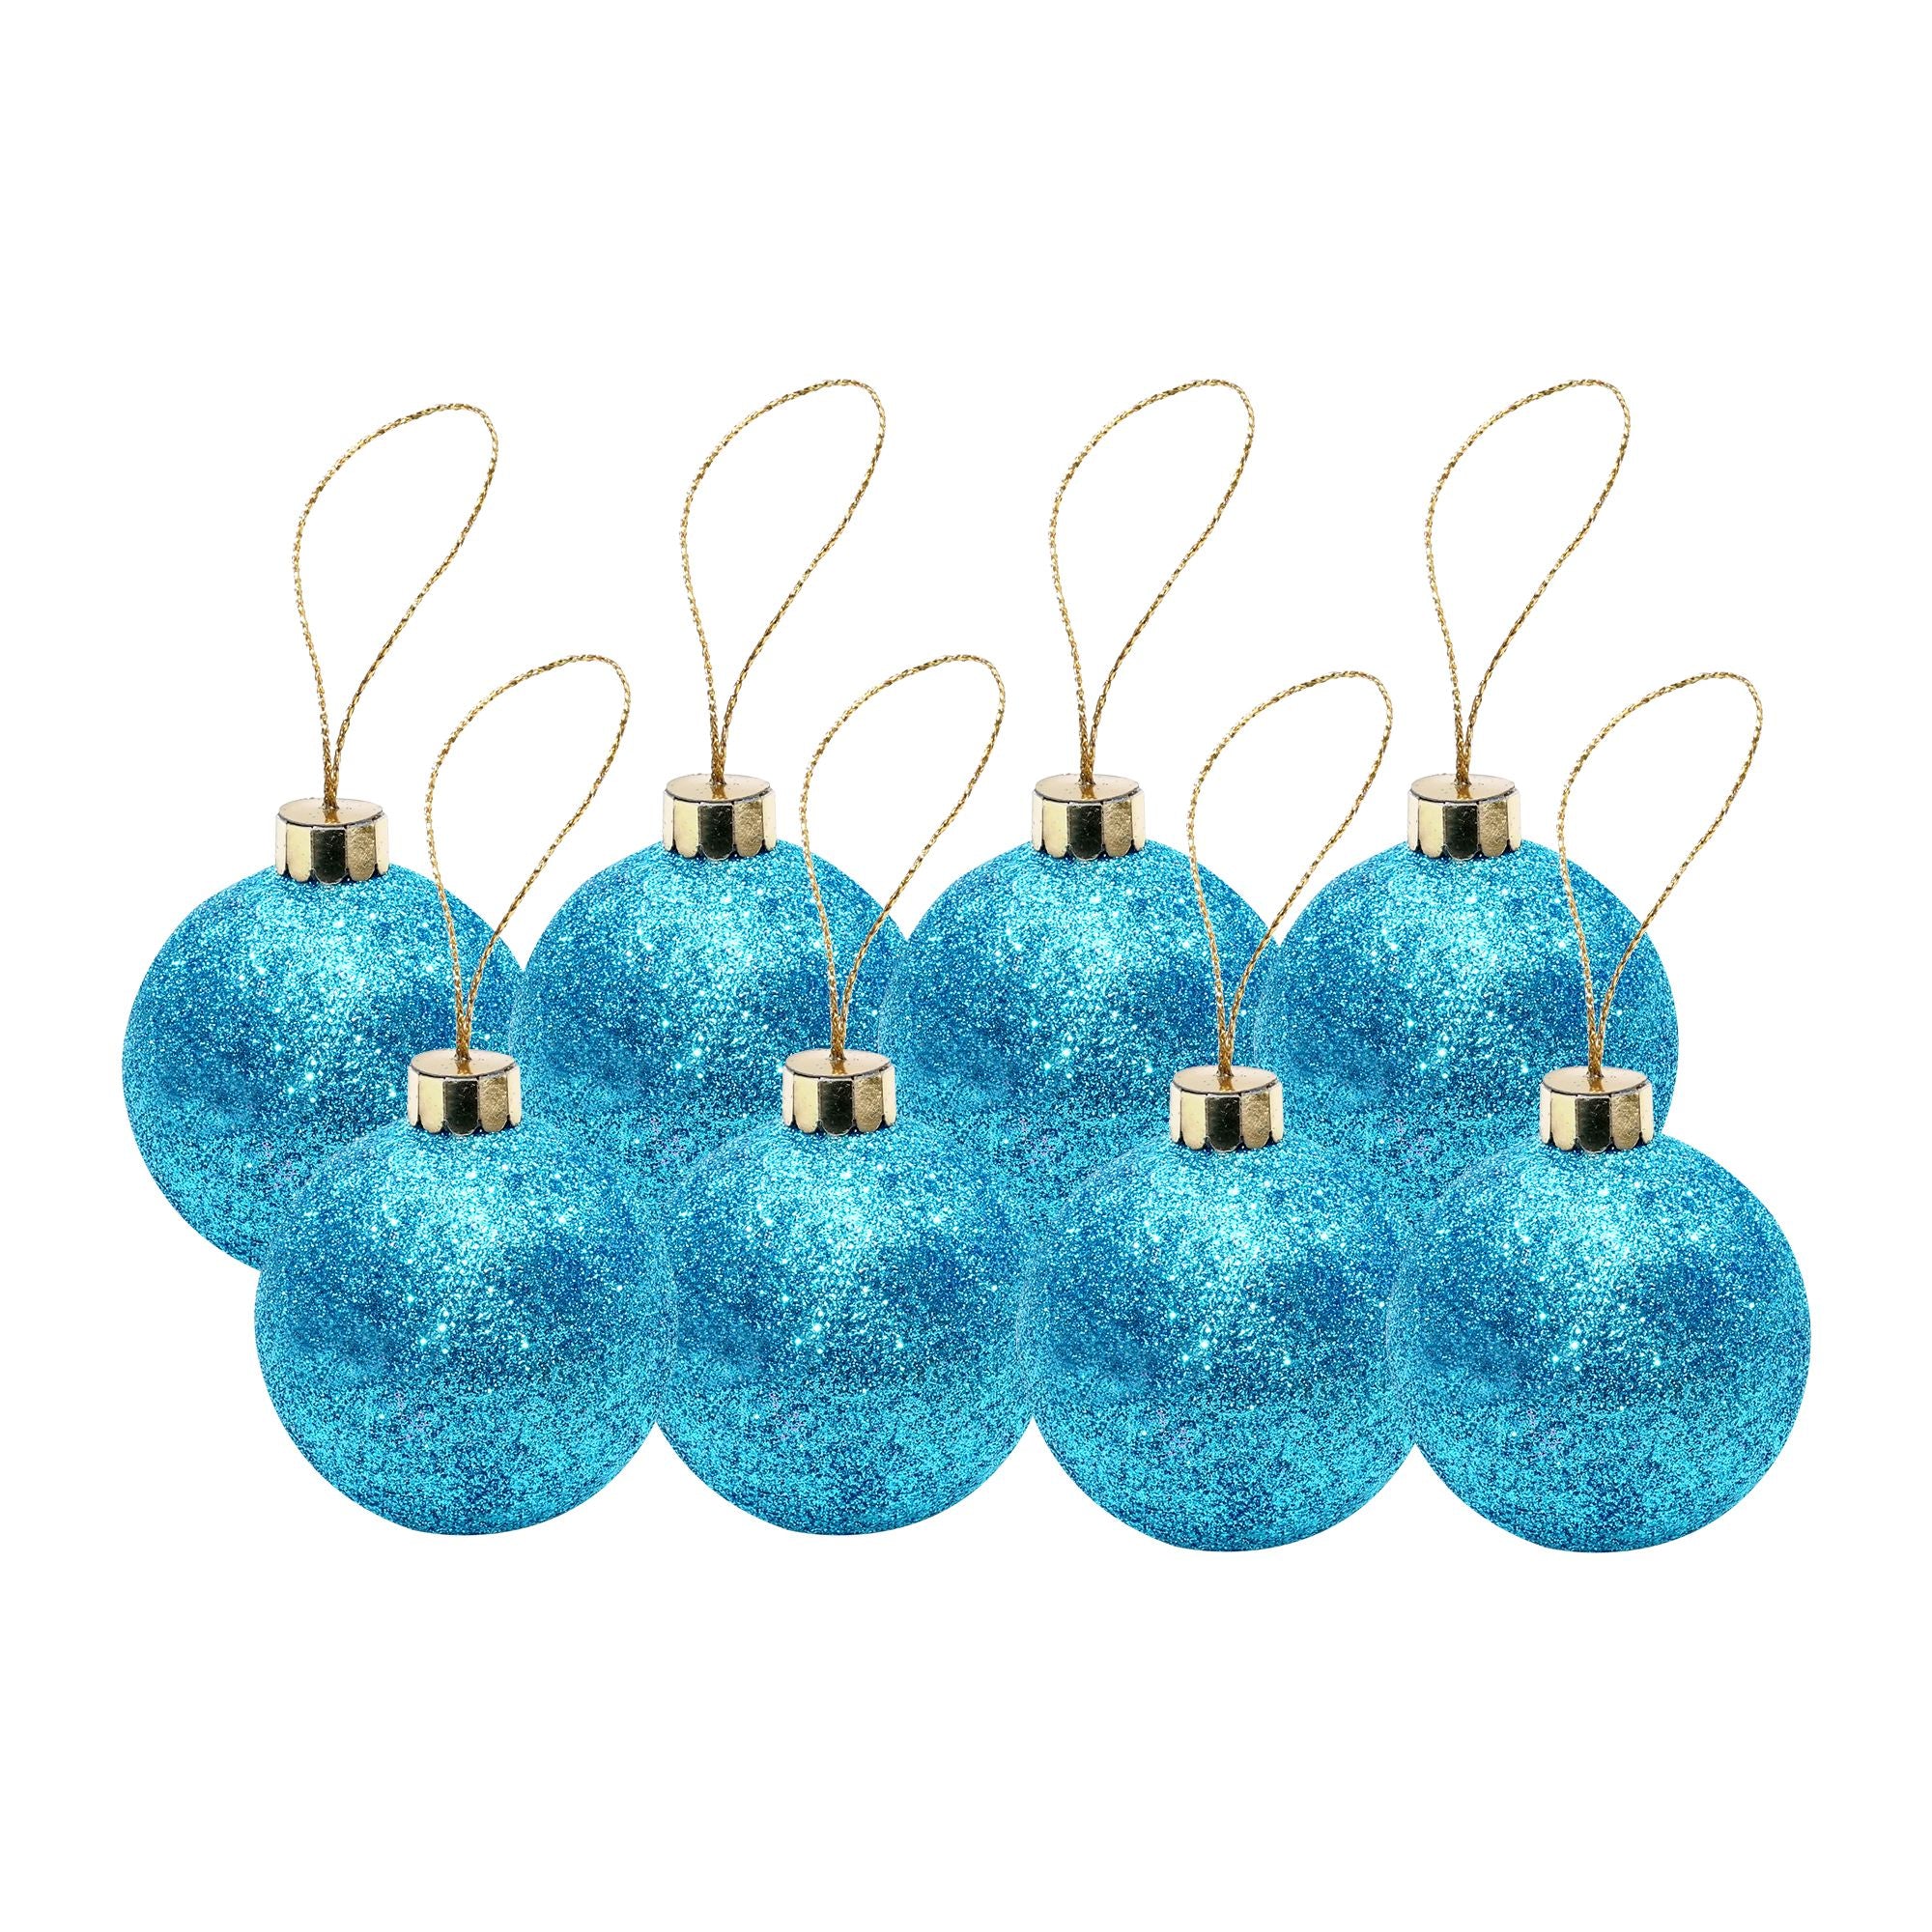 Handmade Christmas Ornaments - Glitter Baubles, 50mm, Blue, 8pc